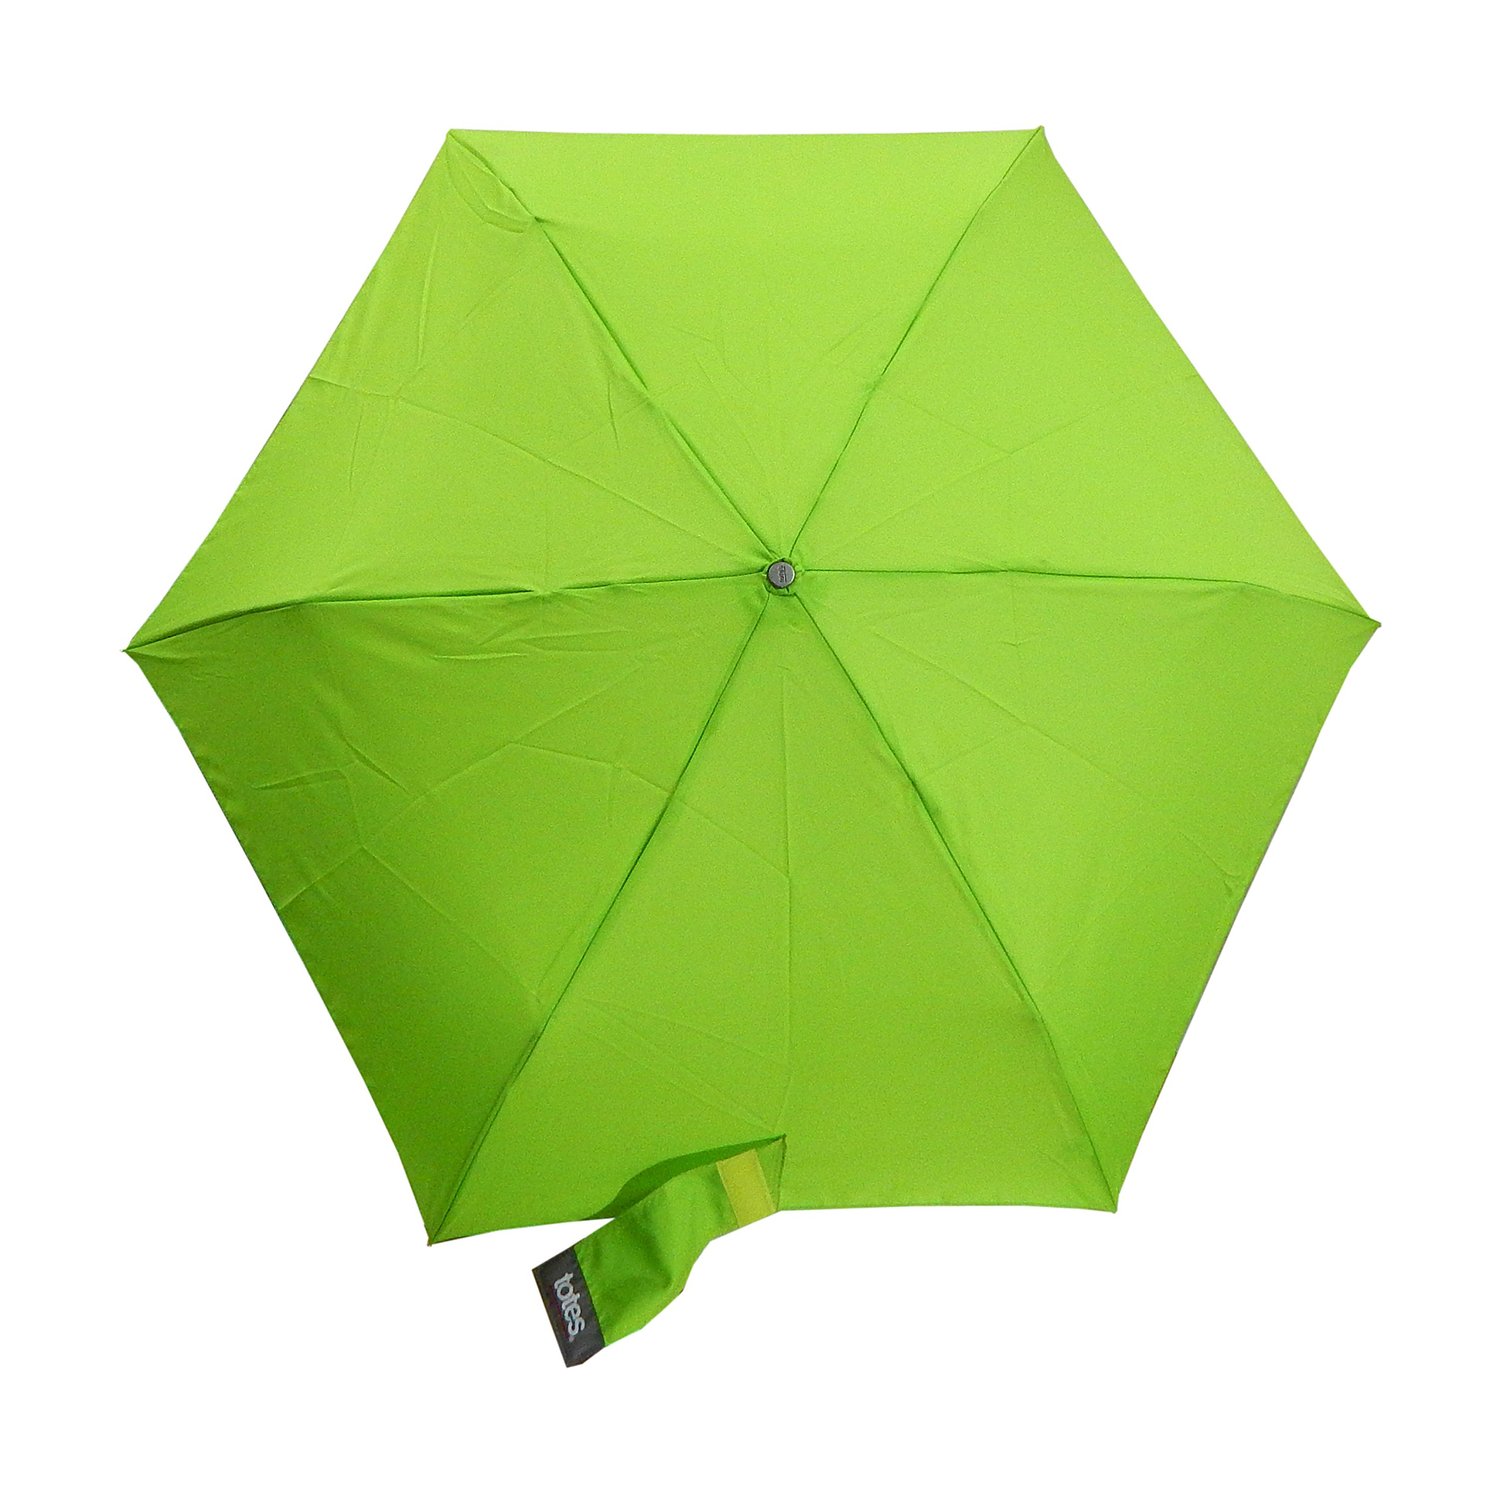 Totes Super Light Weight Compact Folding Umbrella - Manual Open